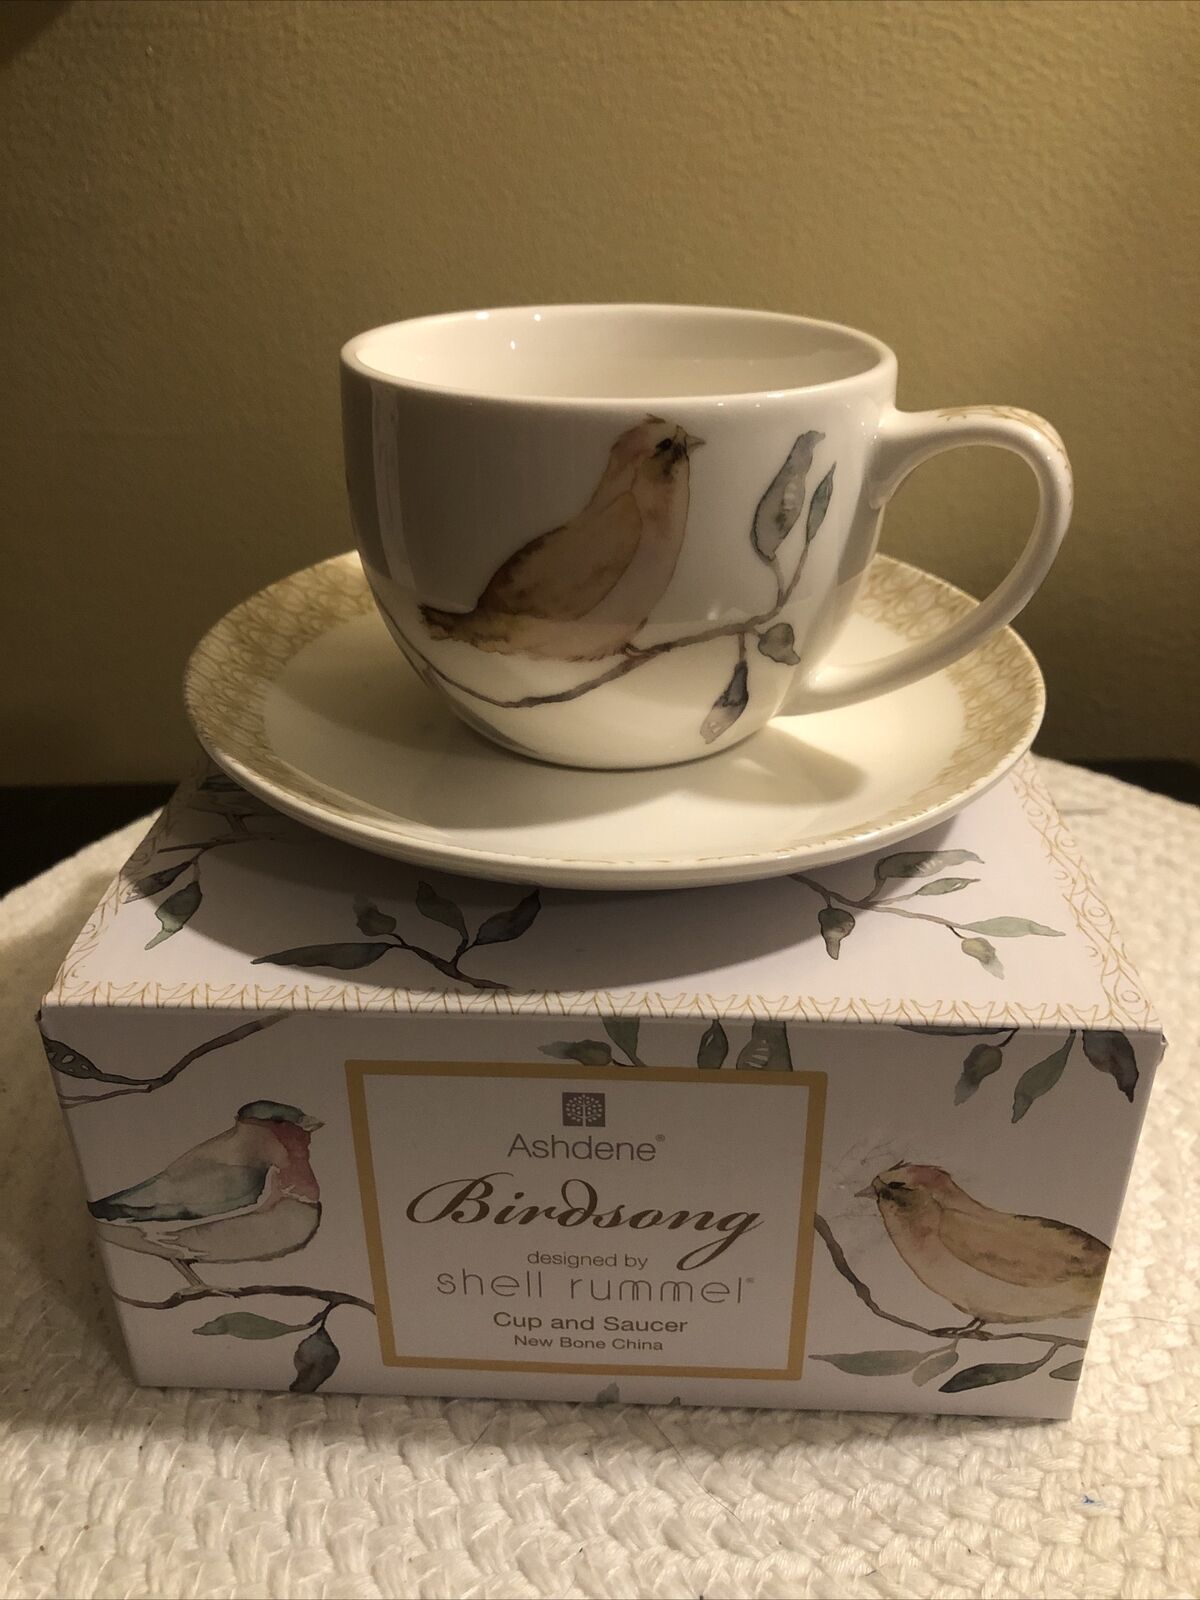 Ashdene -2￼ Tea Cups And Saucers (Birdsong) New Bone China -shell rummel - Desig